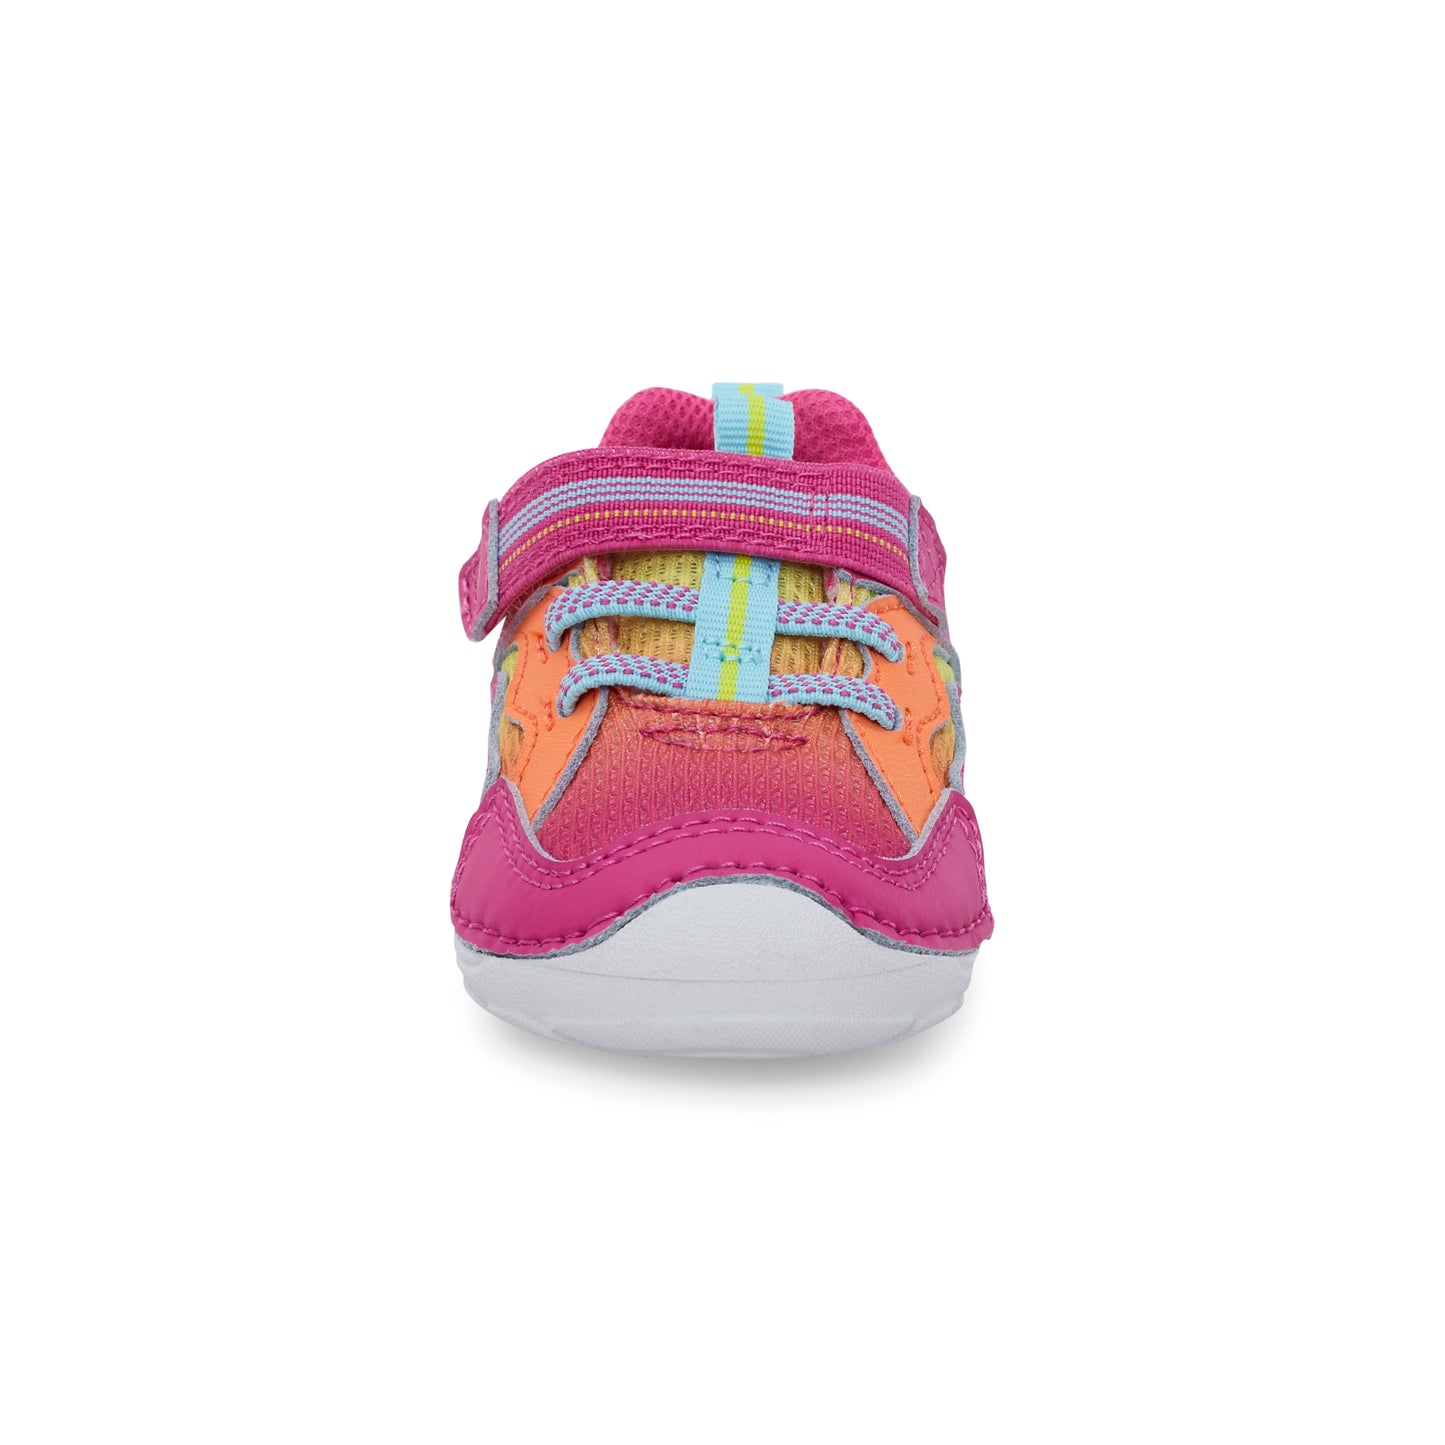 soft-motion-kylo-sneaker-littlekid-pink-neon__Pink/Neon_5